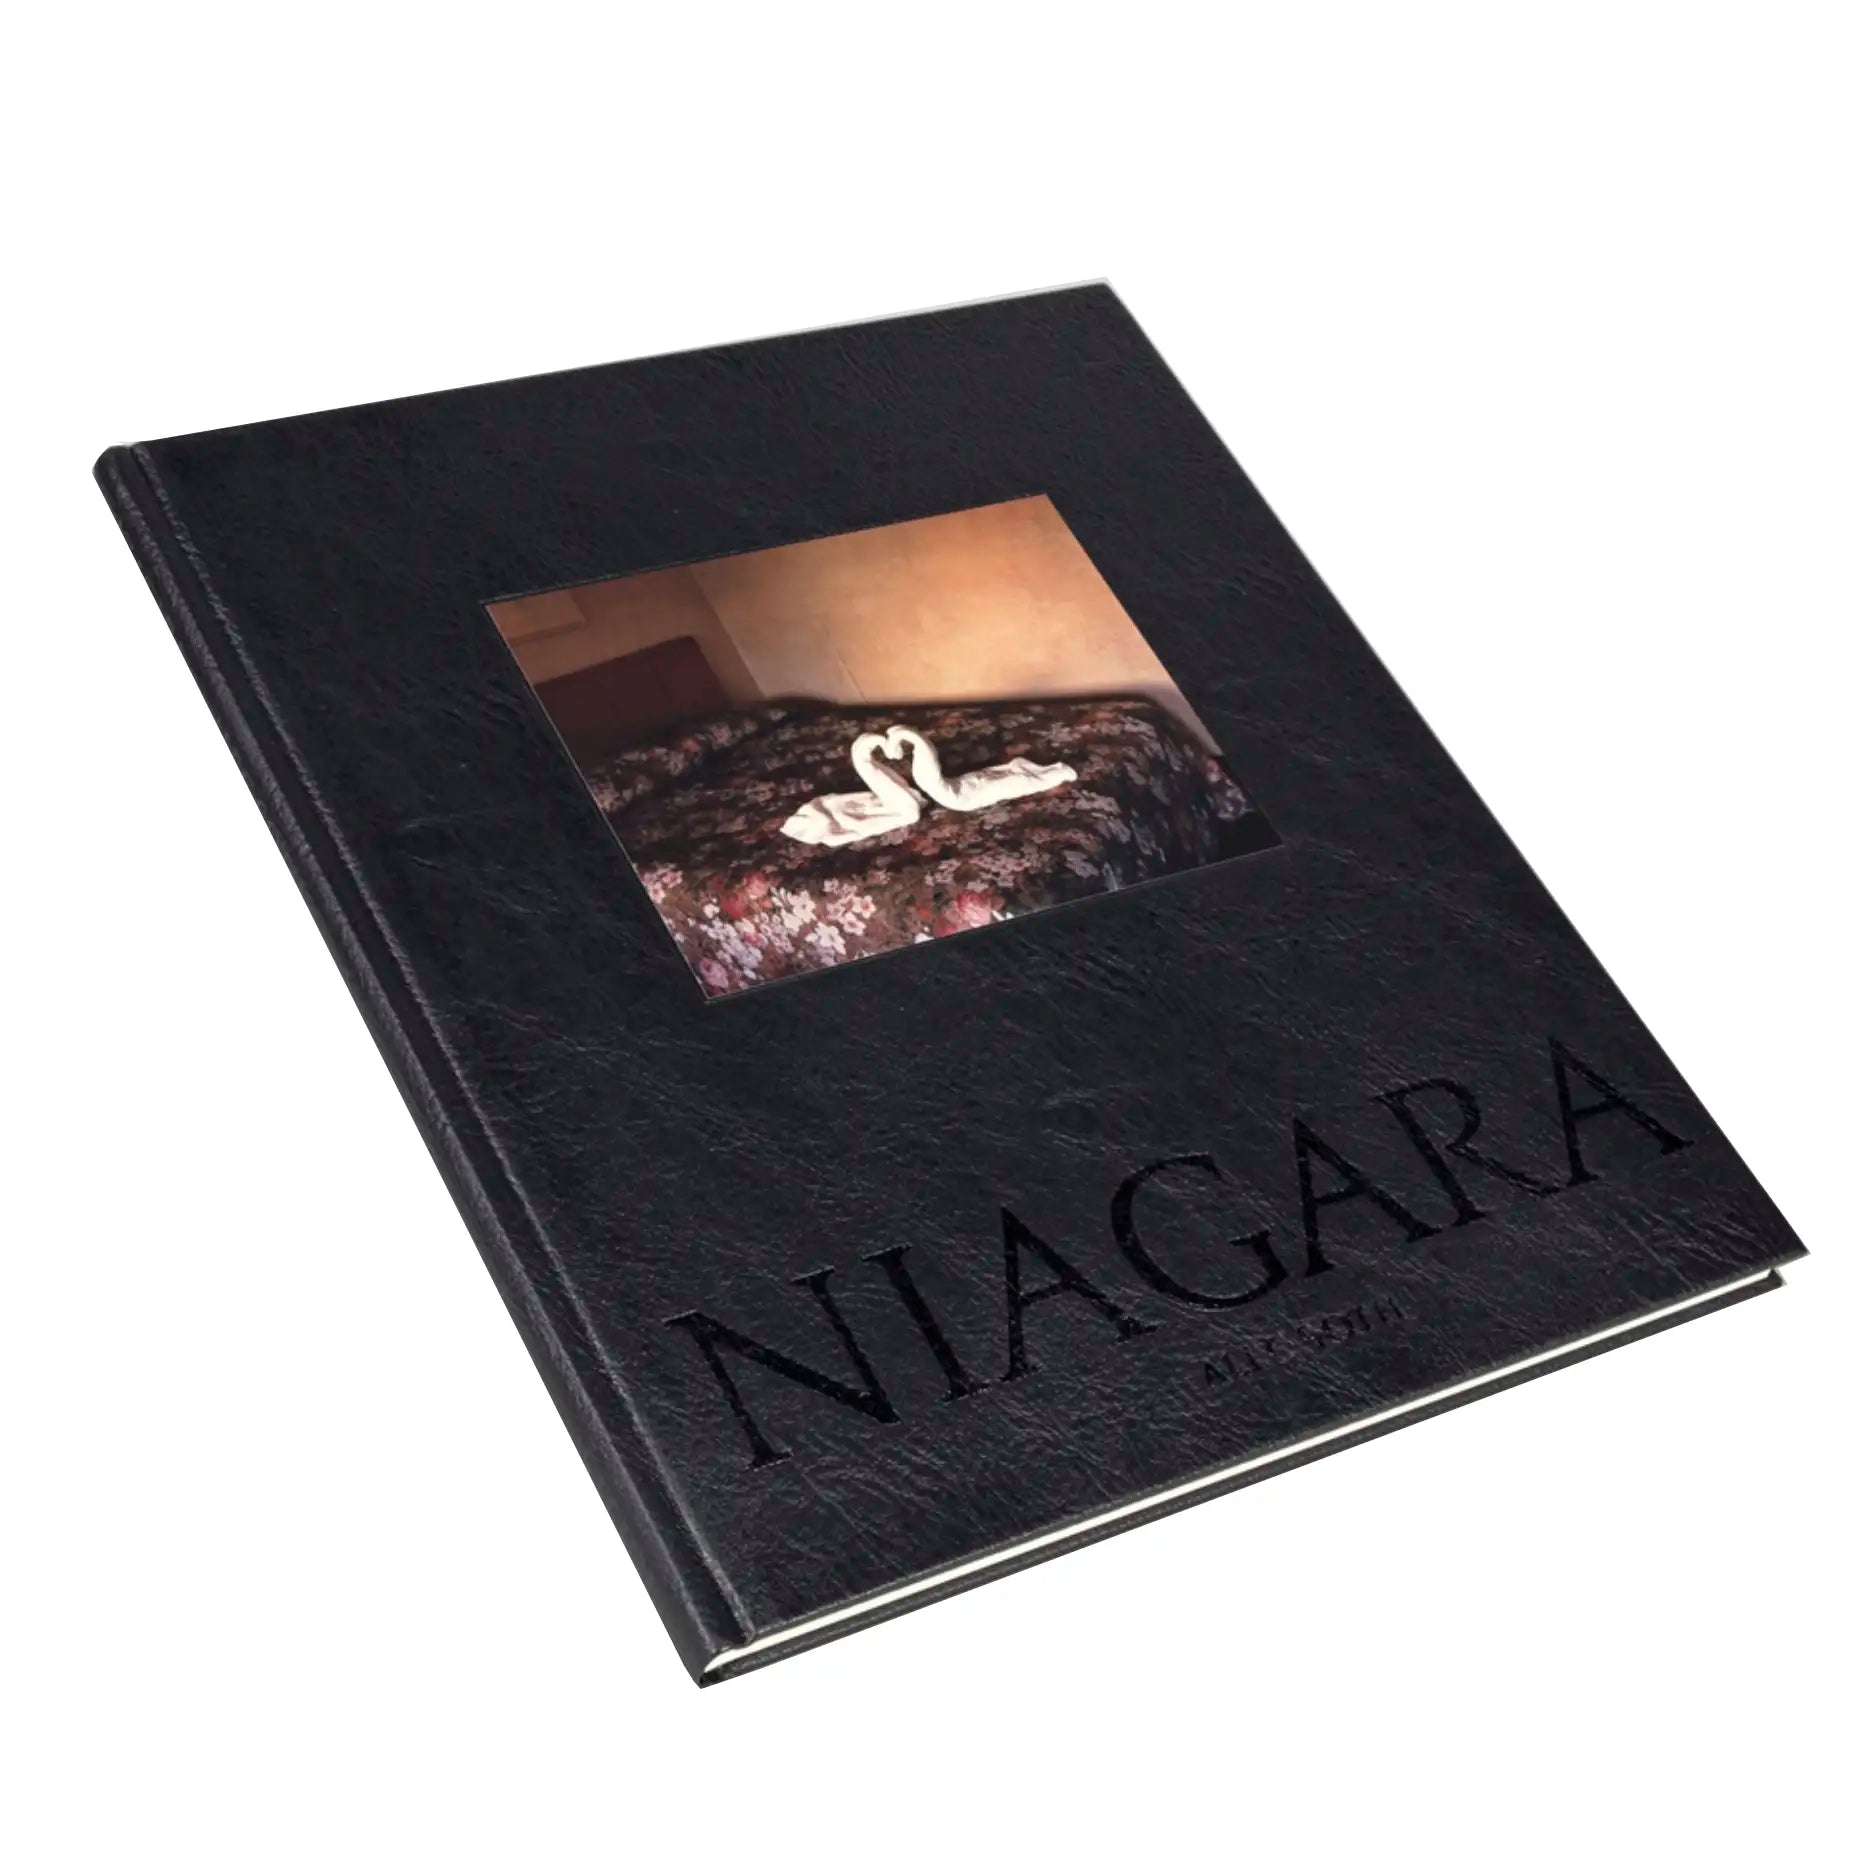 Niagara - first edition, signed